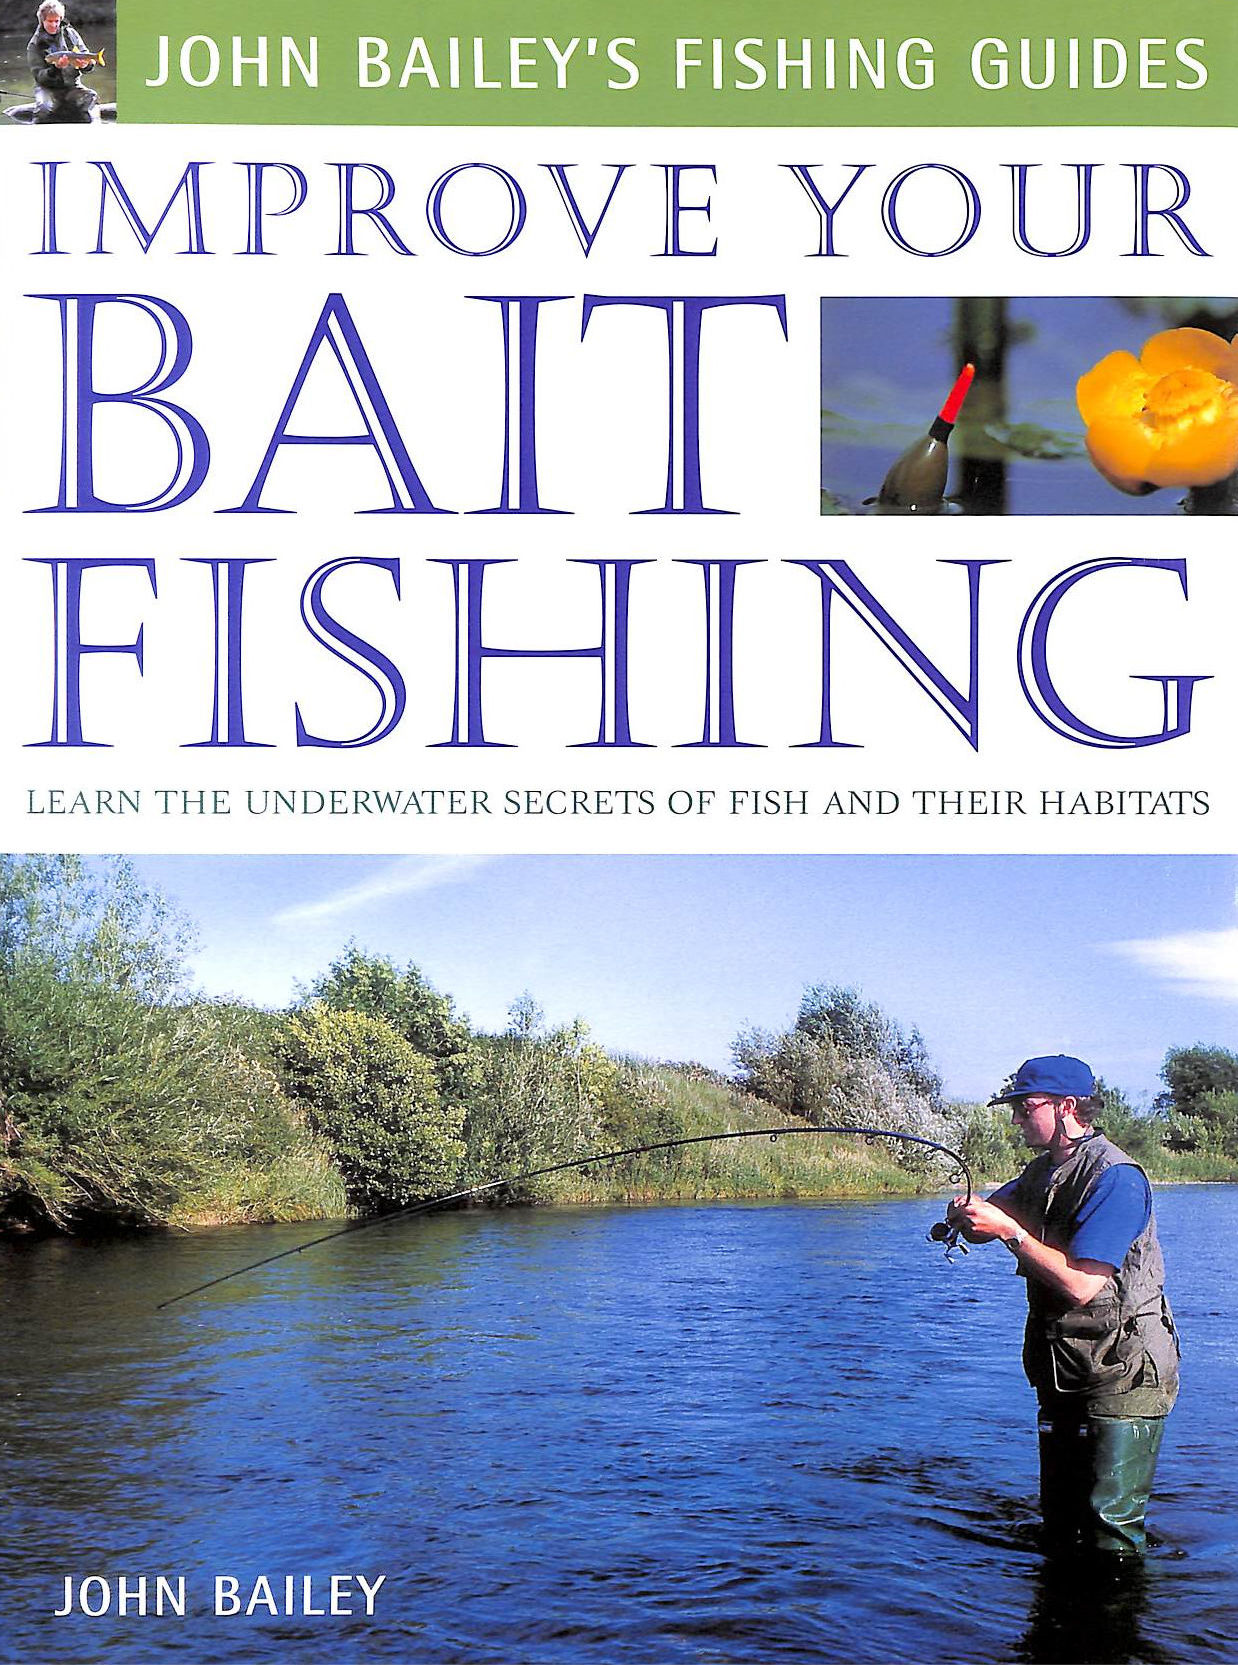 BAILEY, JOHN - Improve Your Bait Fishing: Learn The Underwater Secrets Of Fish Behaviour And Habitats (John Bailey's Fishing Guides)